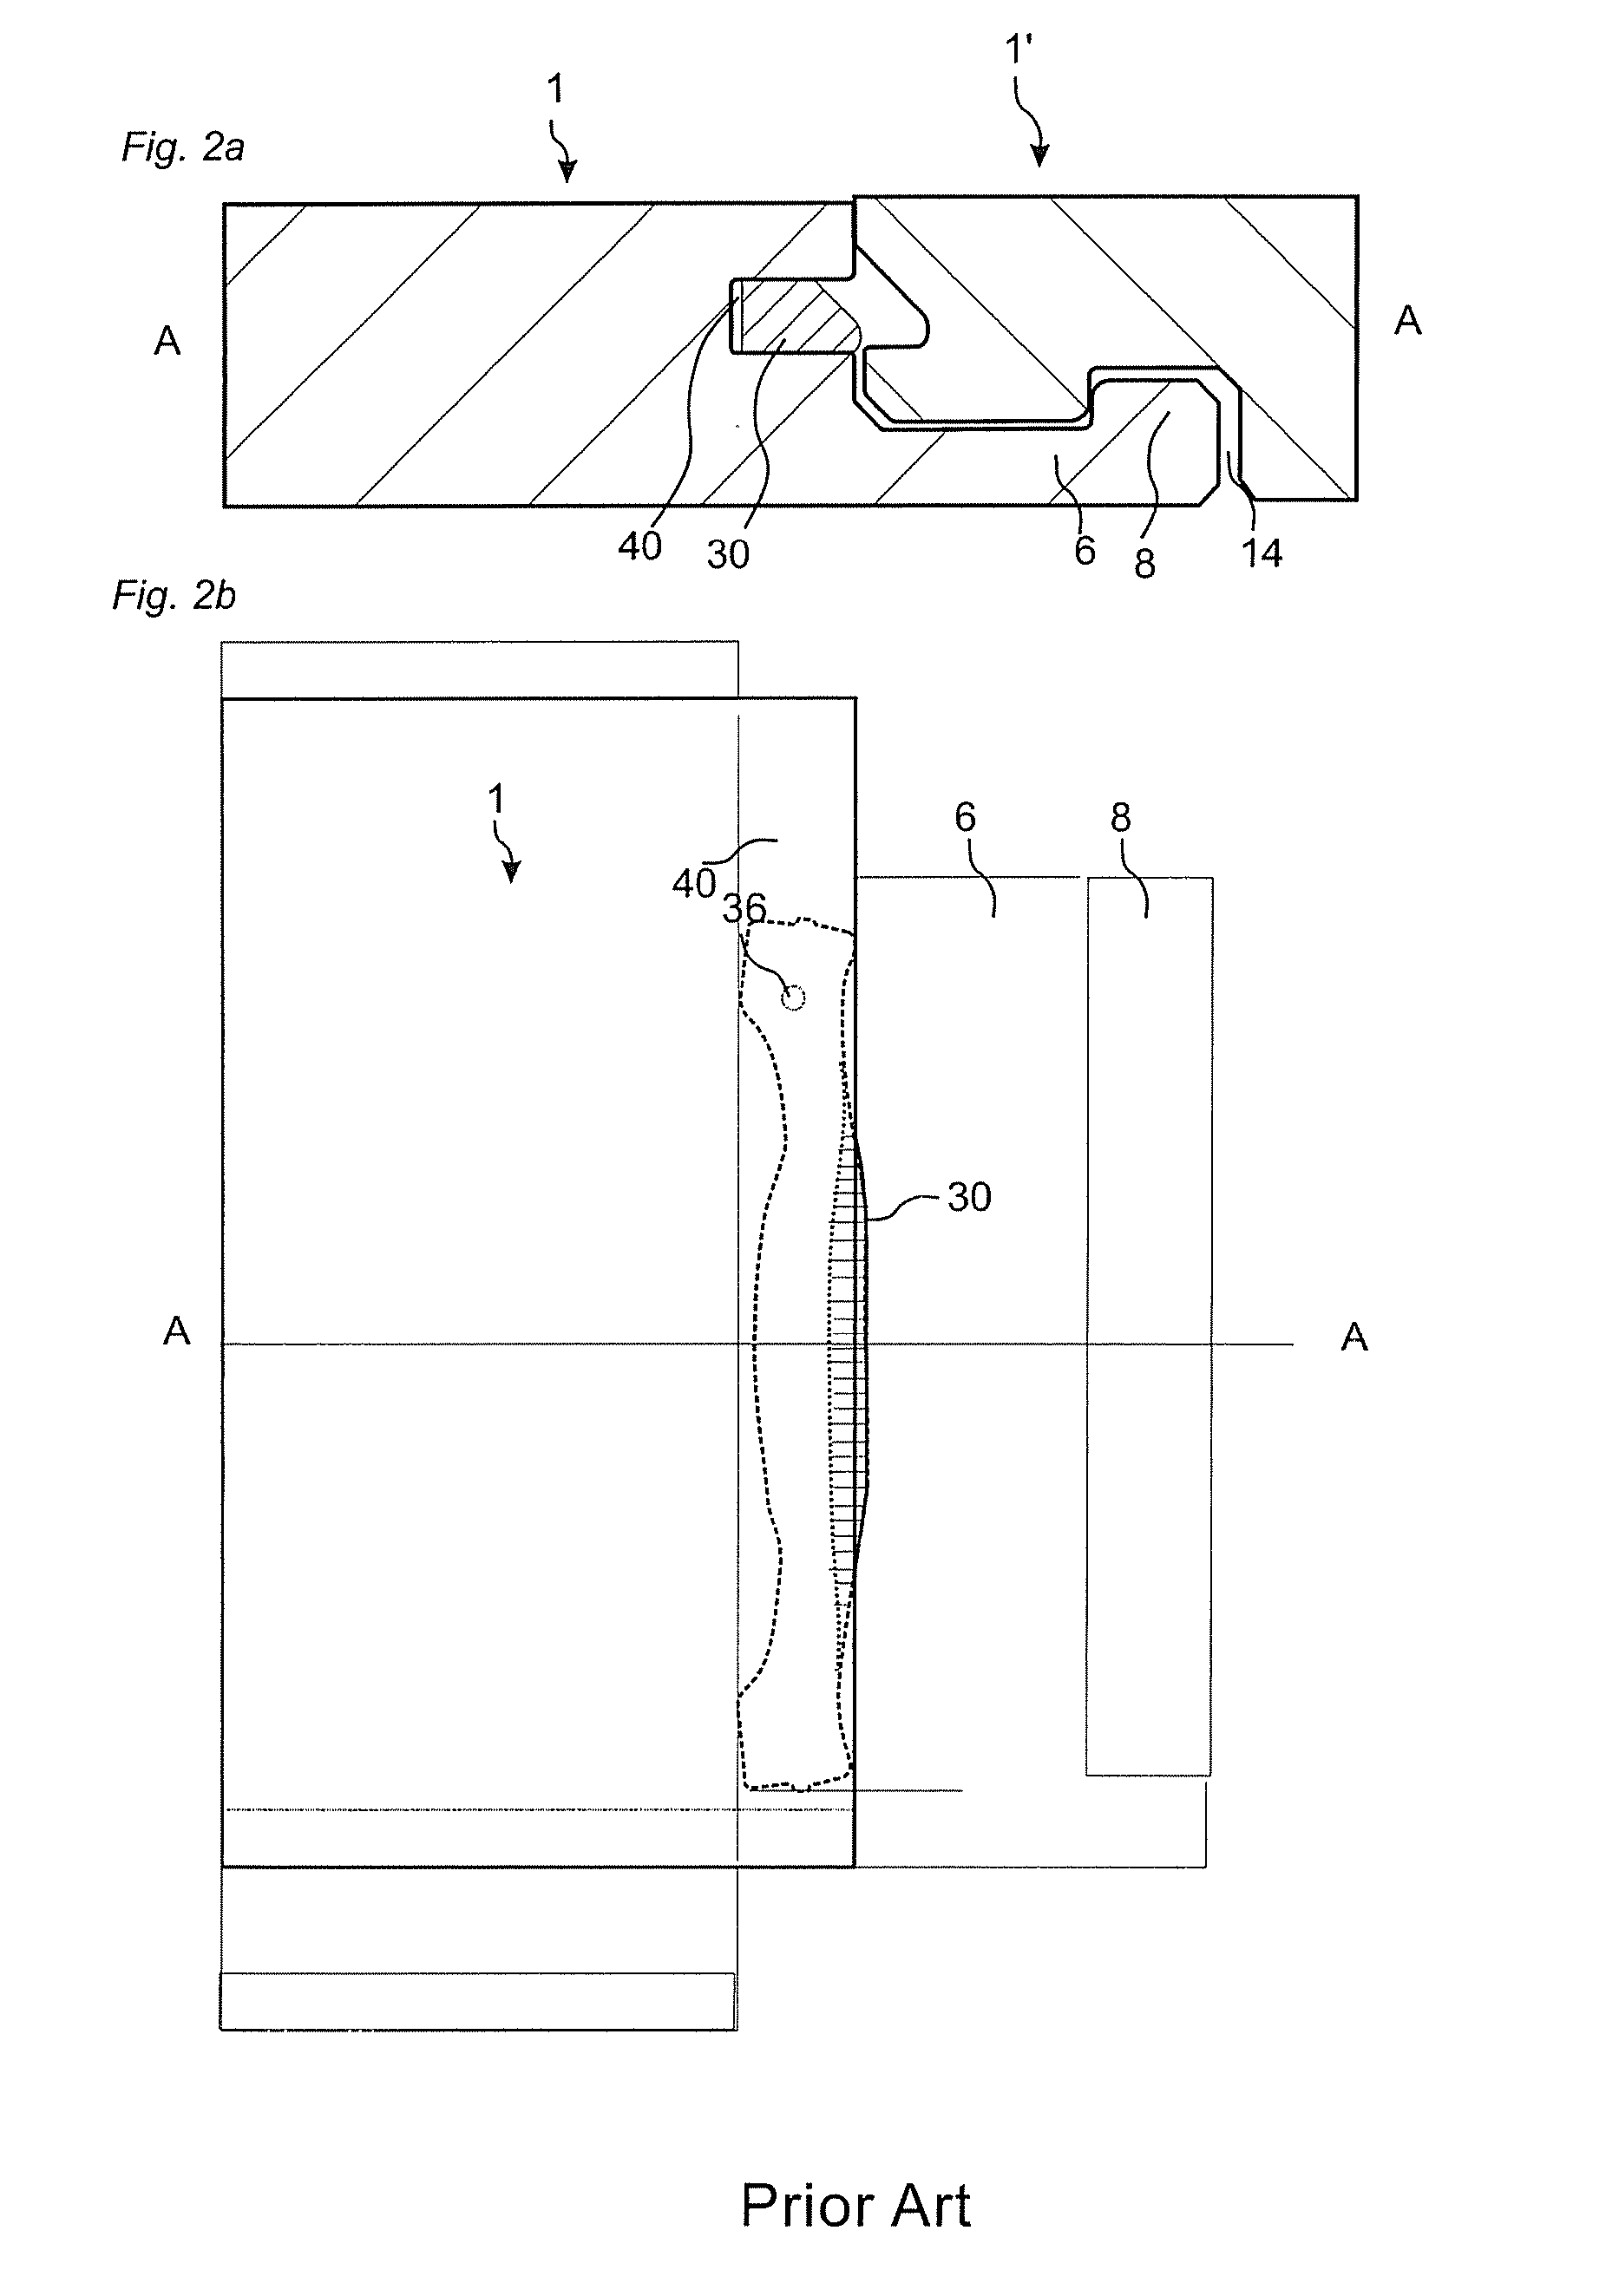 Mechanical Locking of Floor Panels